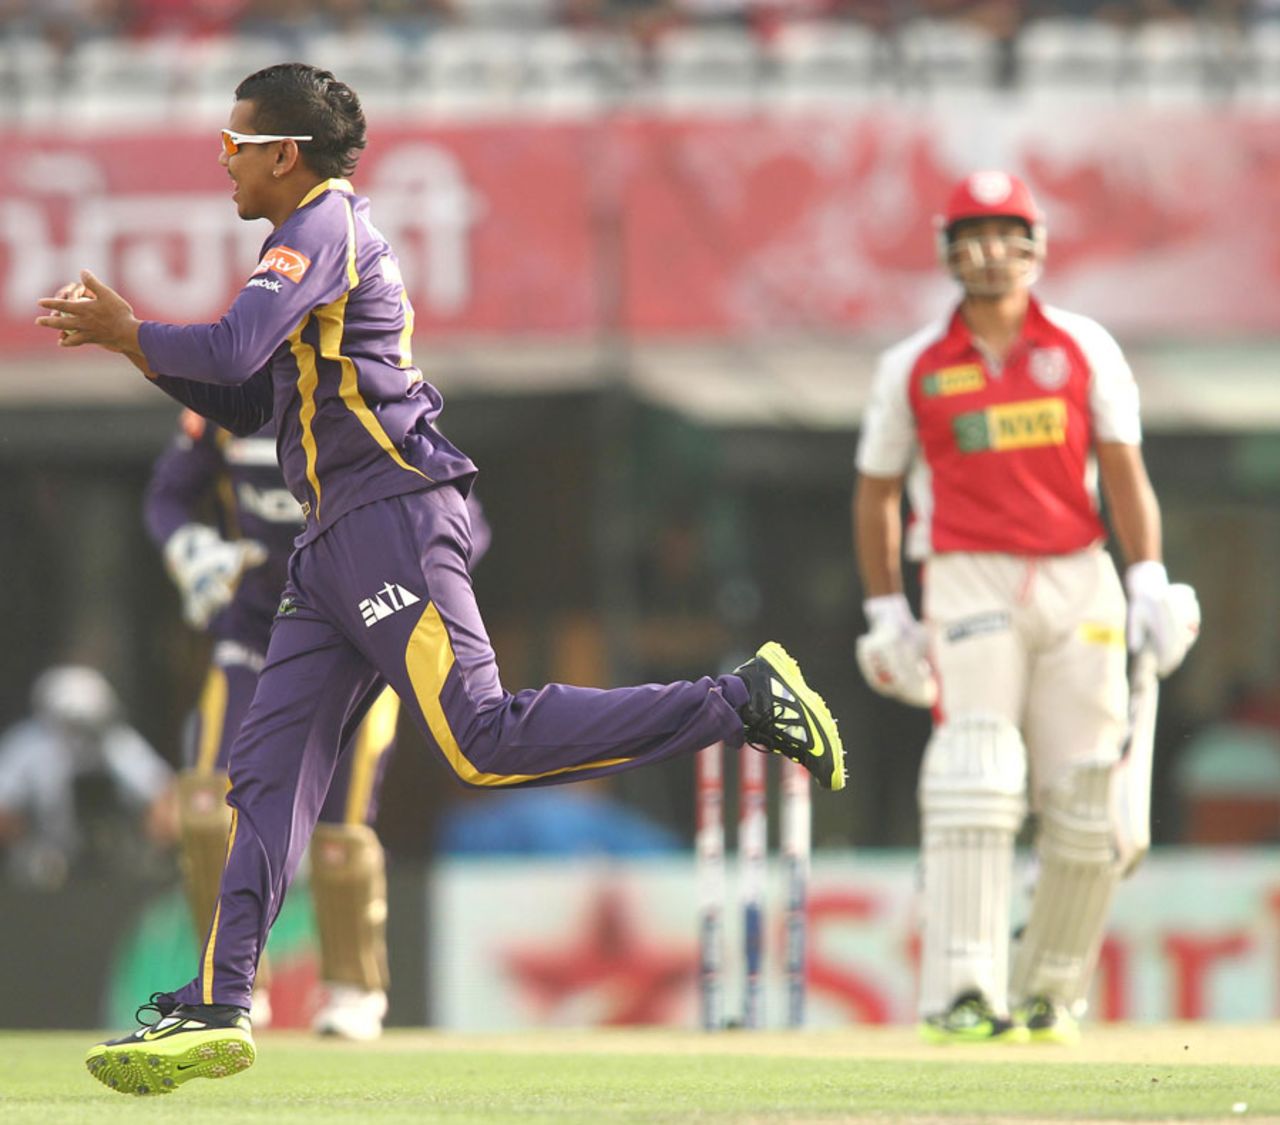 Sunil Narine takes a catch off his bowling to dismiss Azhar Mahmood, Kings XI Punjab v Kolkata Knight Riders, IPL 2013, Mohali, April 16, 2013